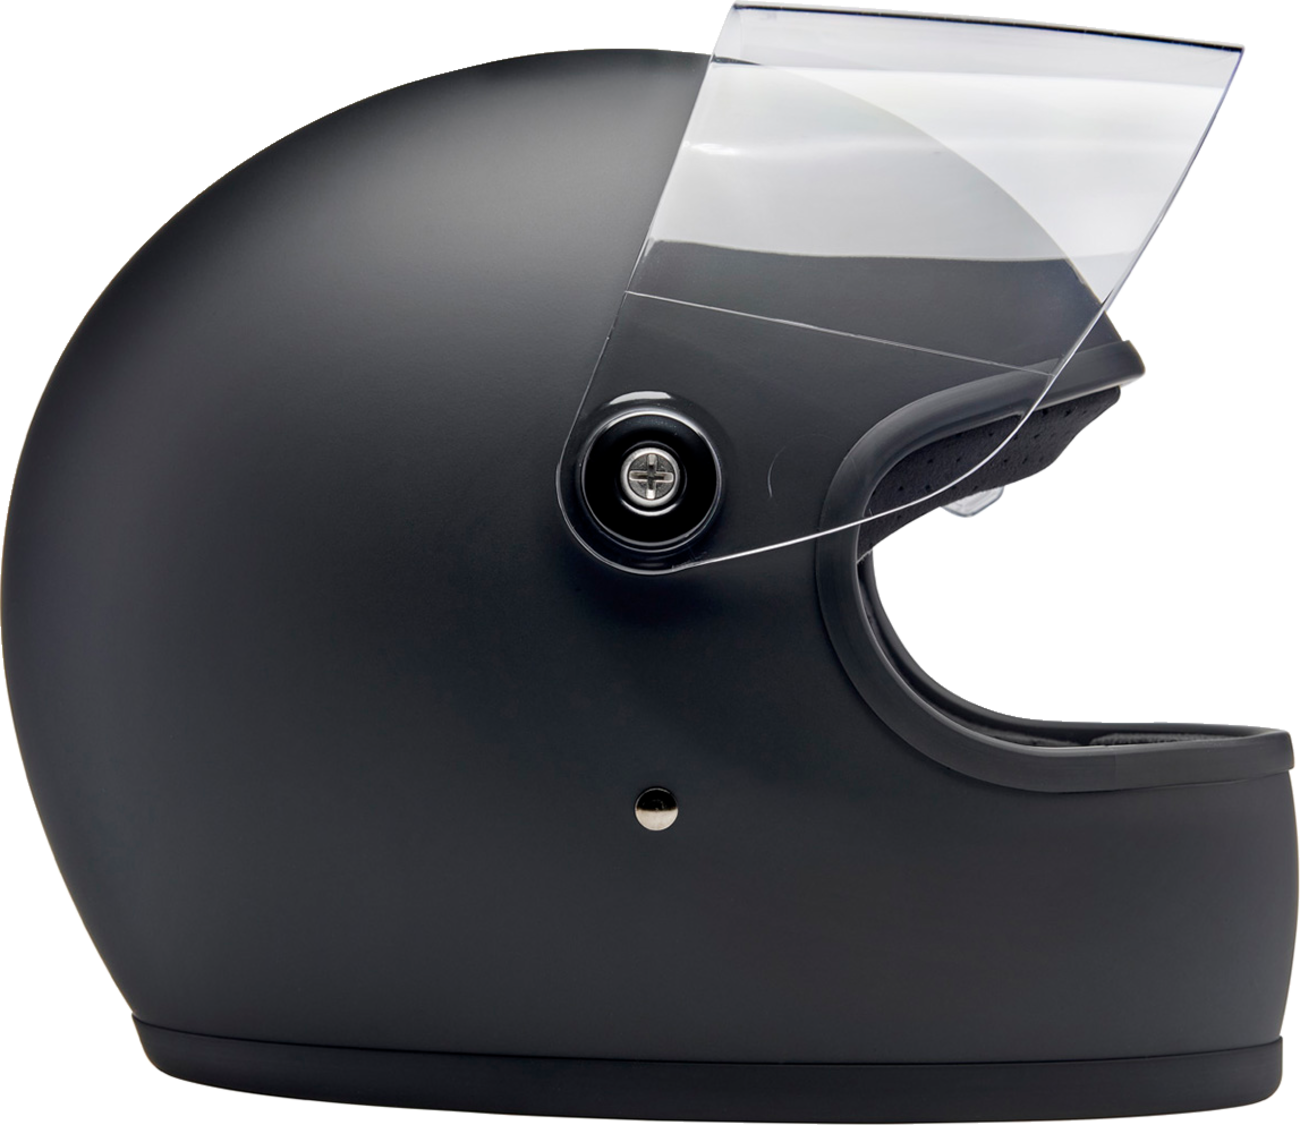 BILTWELL Gringo S Helmet - Flat Black - 2XL 1003-201-506